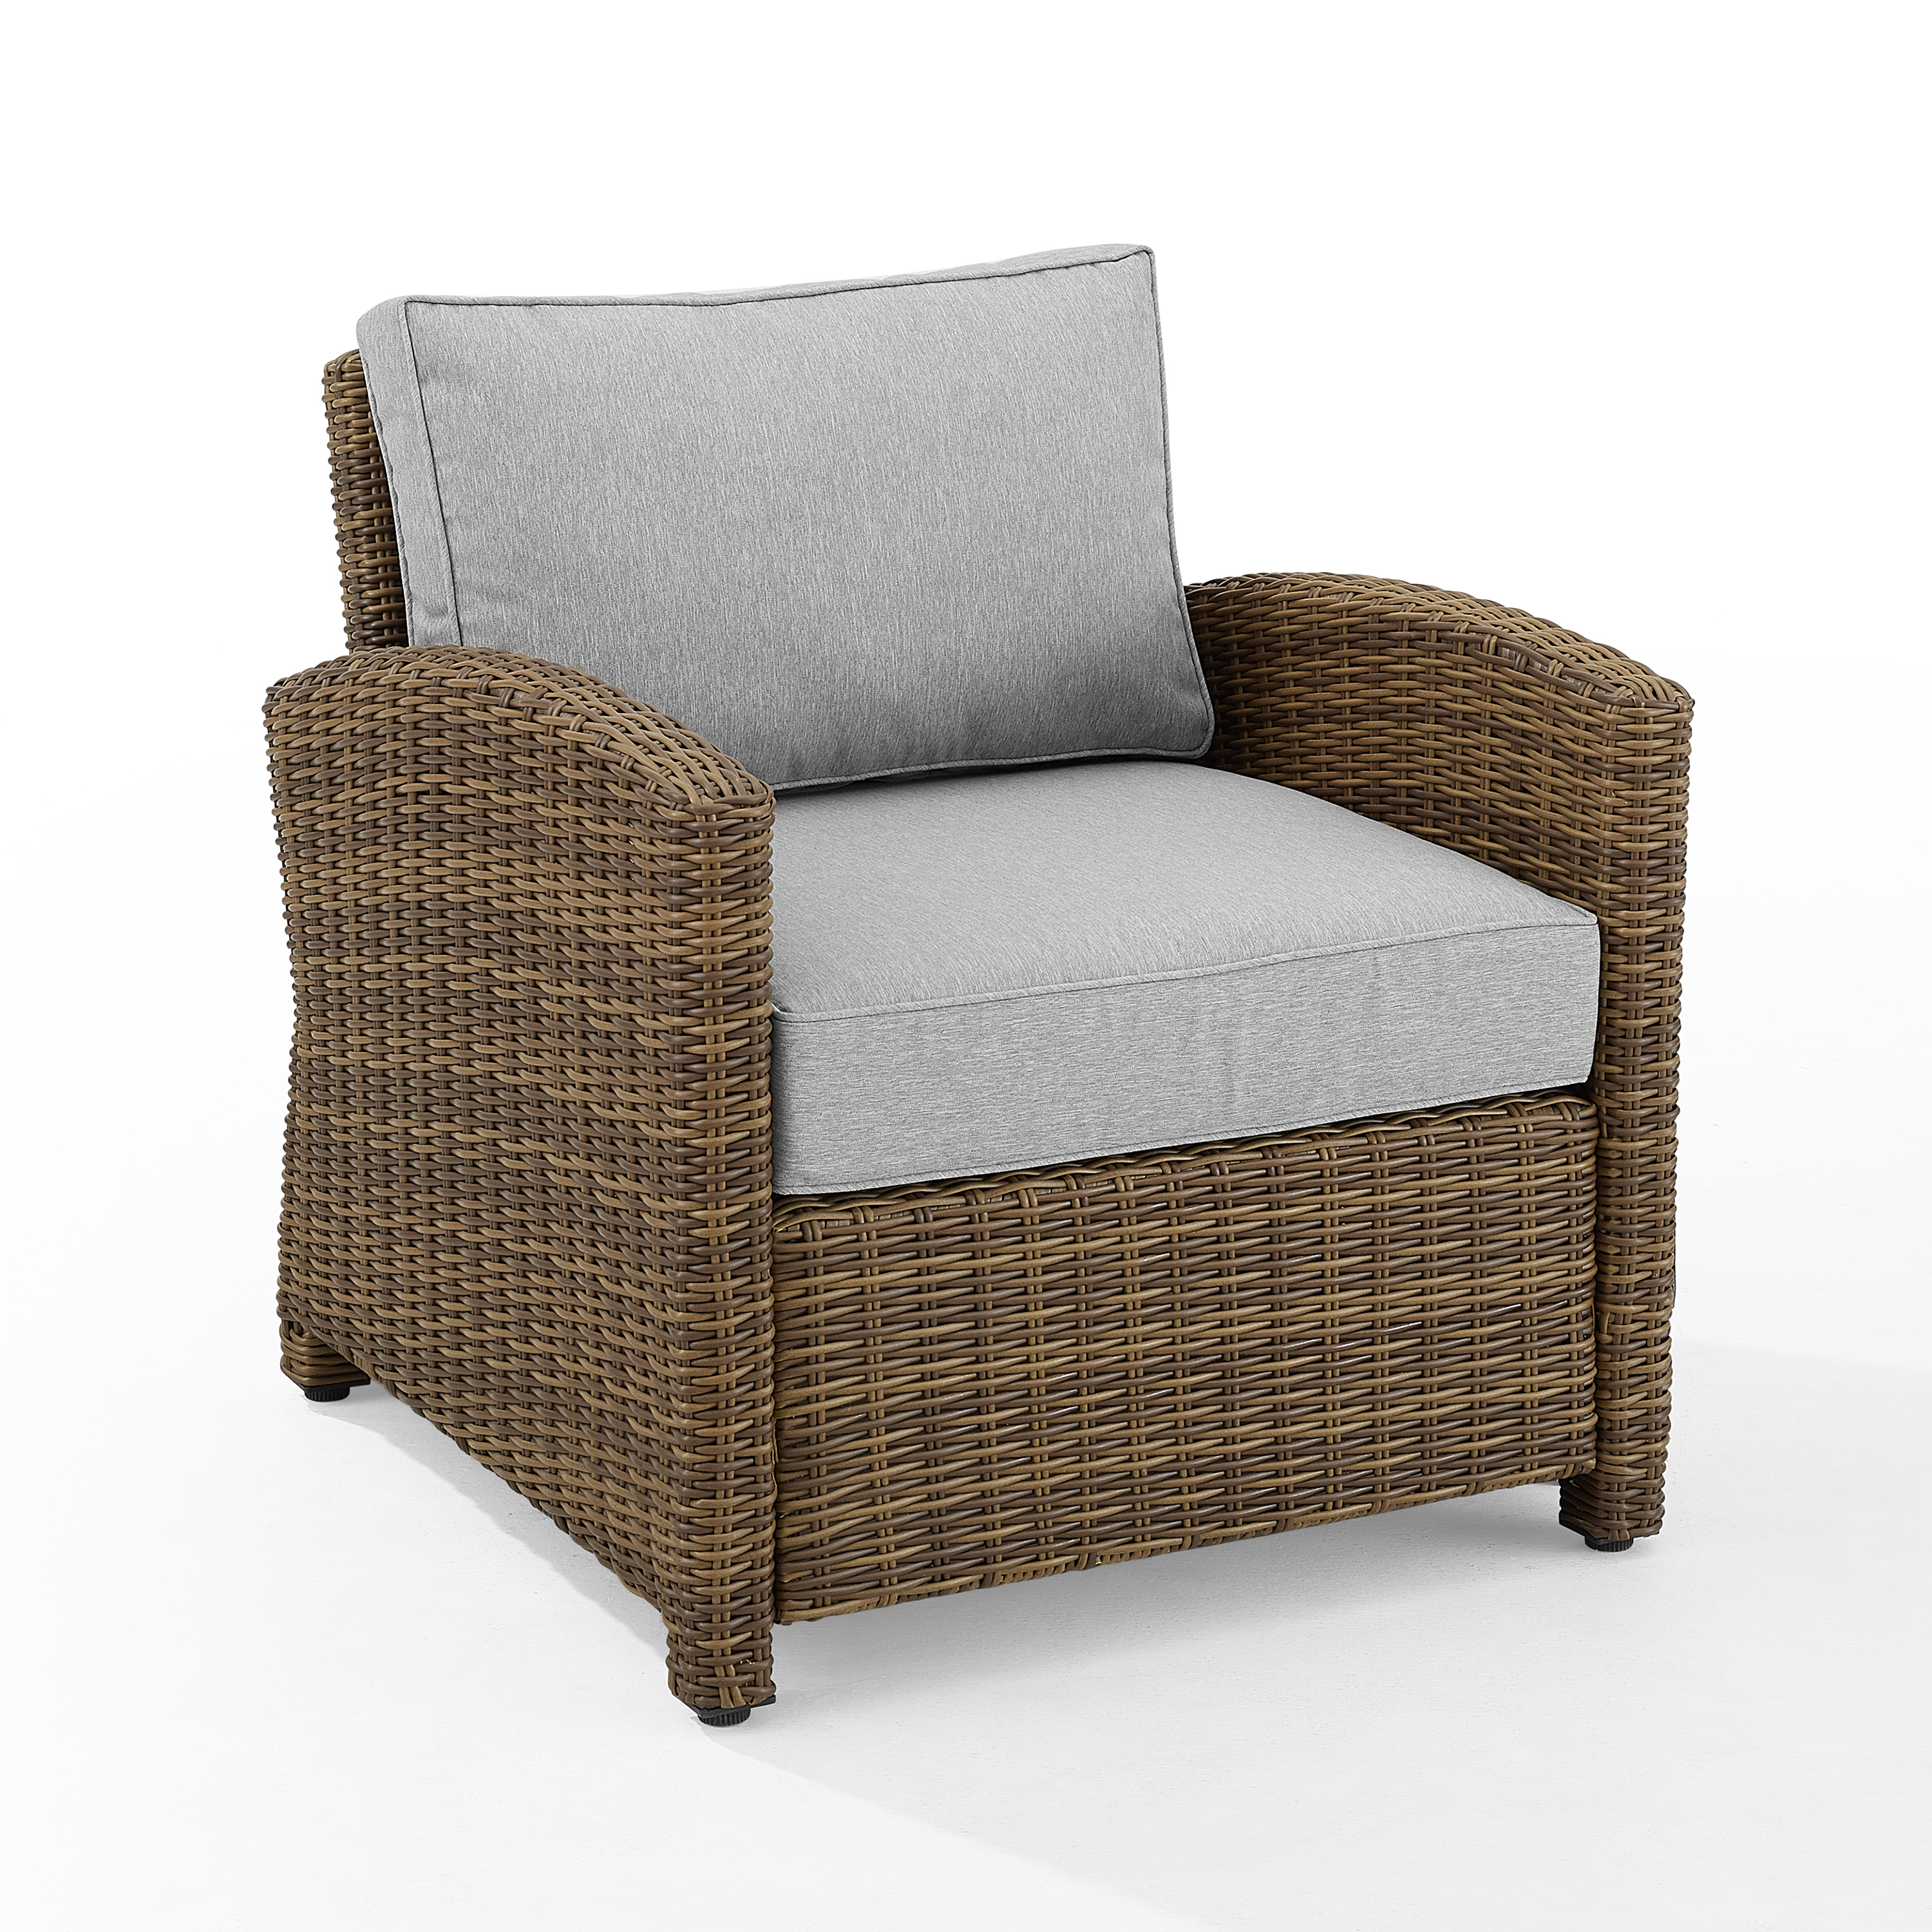 Crosley Furniture Bradenton 18.5" Wicker / Rattan Outdoor Armchair in Gray/Brown - image 1 of 12